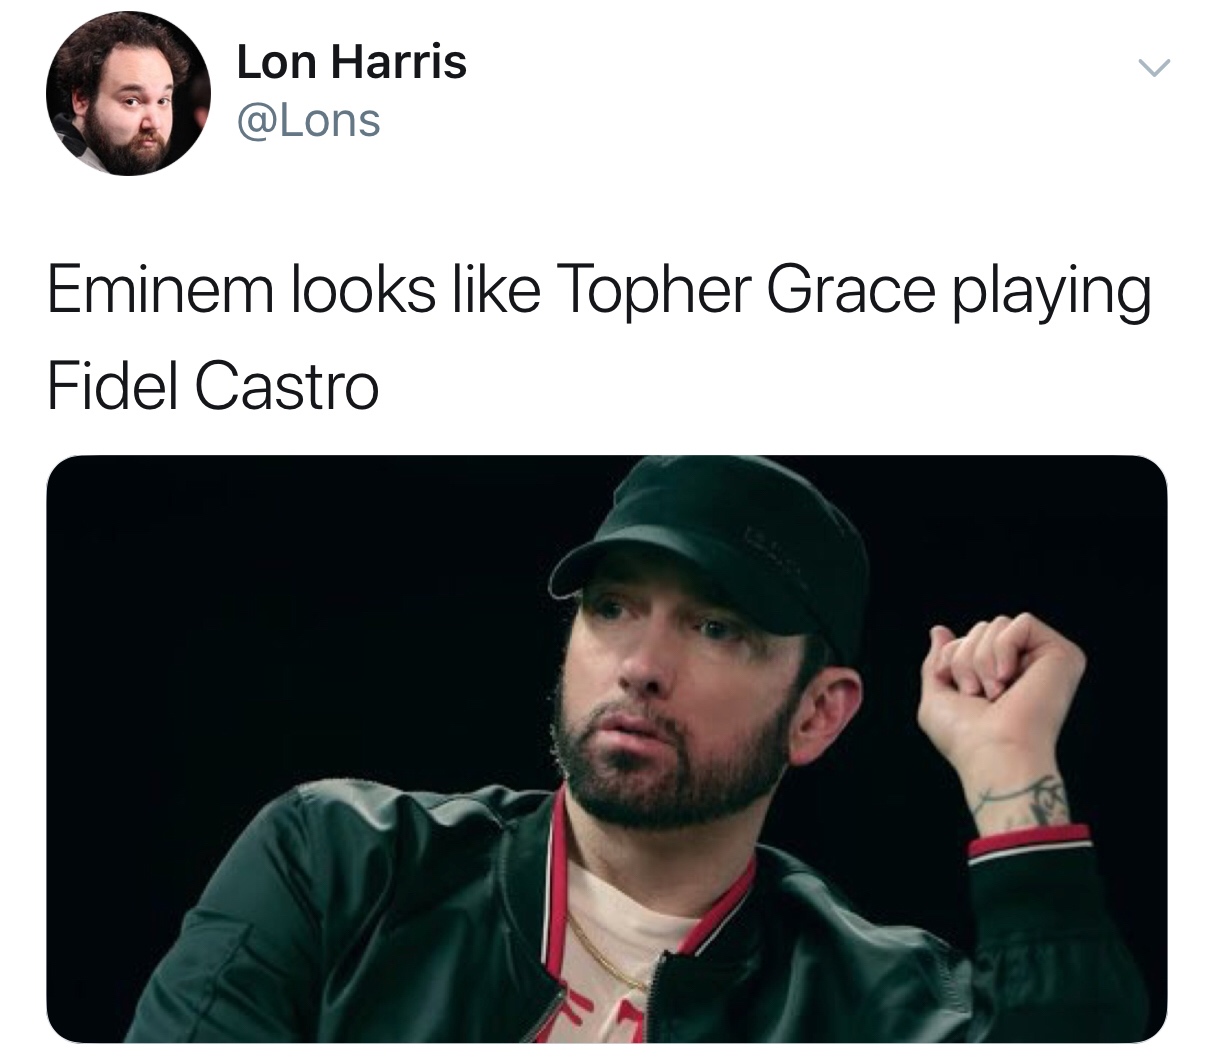 eminem topher grace fidel castro - Lon Harris Eminem looks Topher Grace playing Fidel Castro